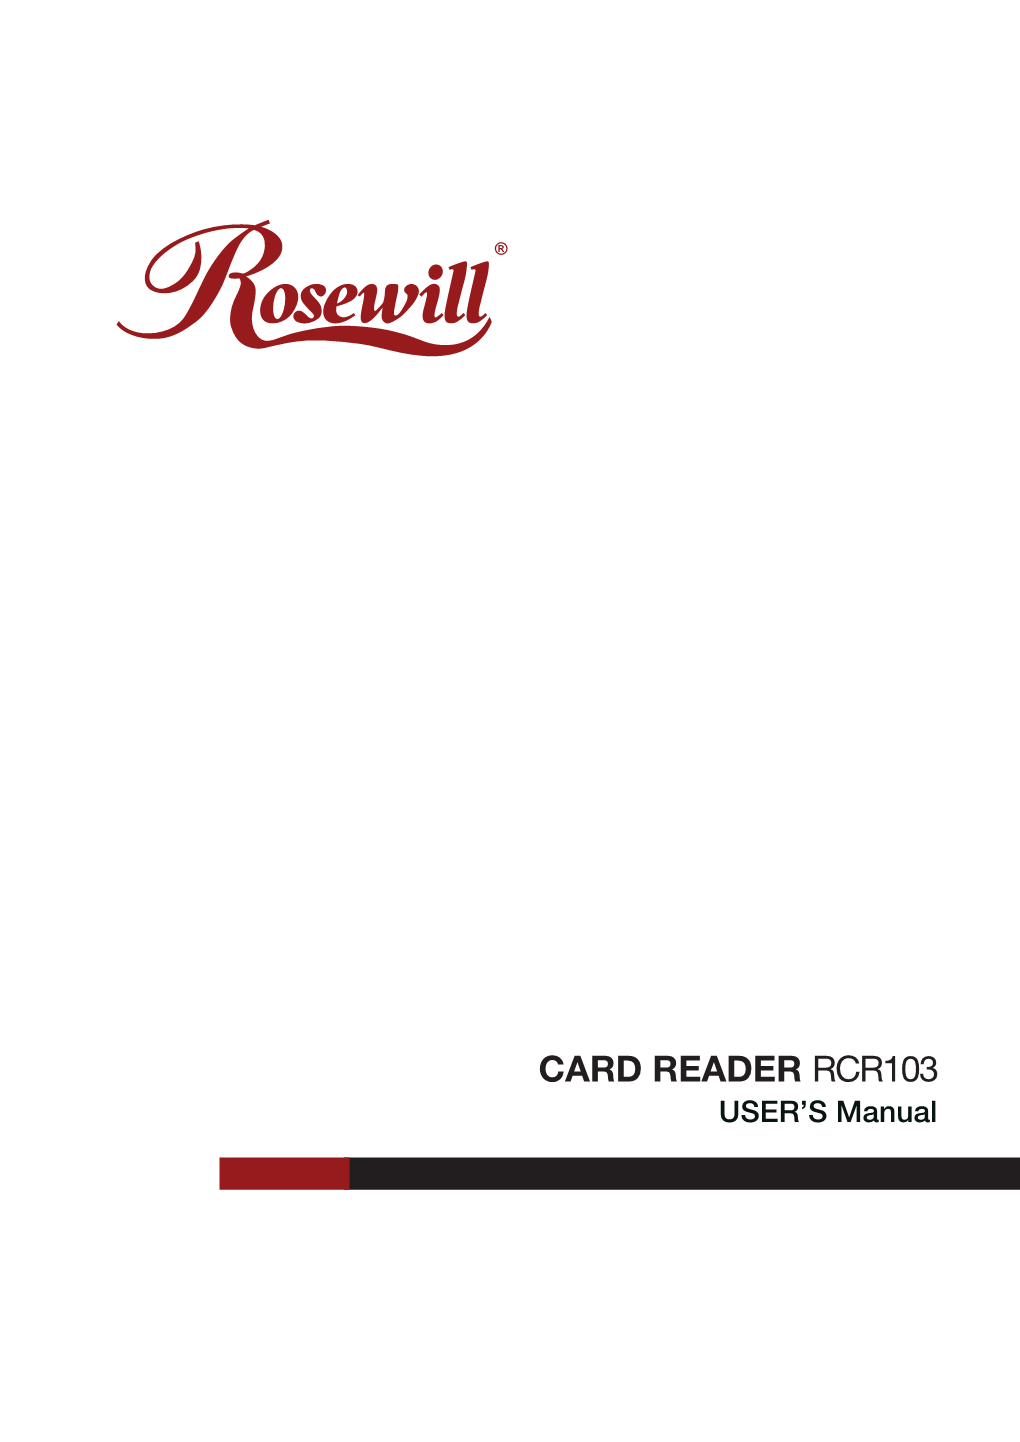 CARD READER RCR103 USER’S Manual CARD READER RCR103 USER’S Manual